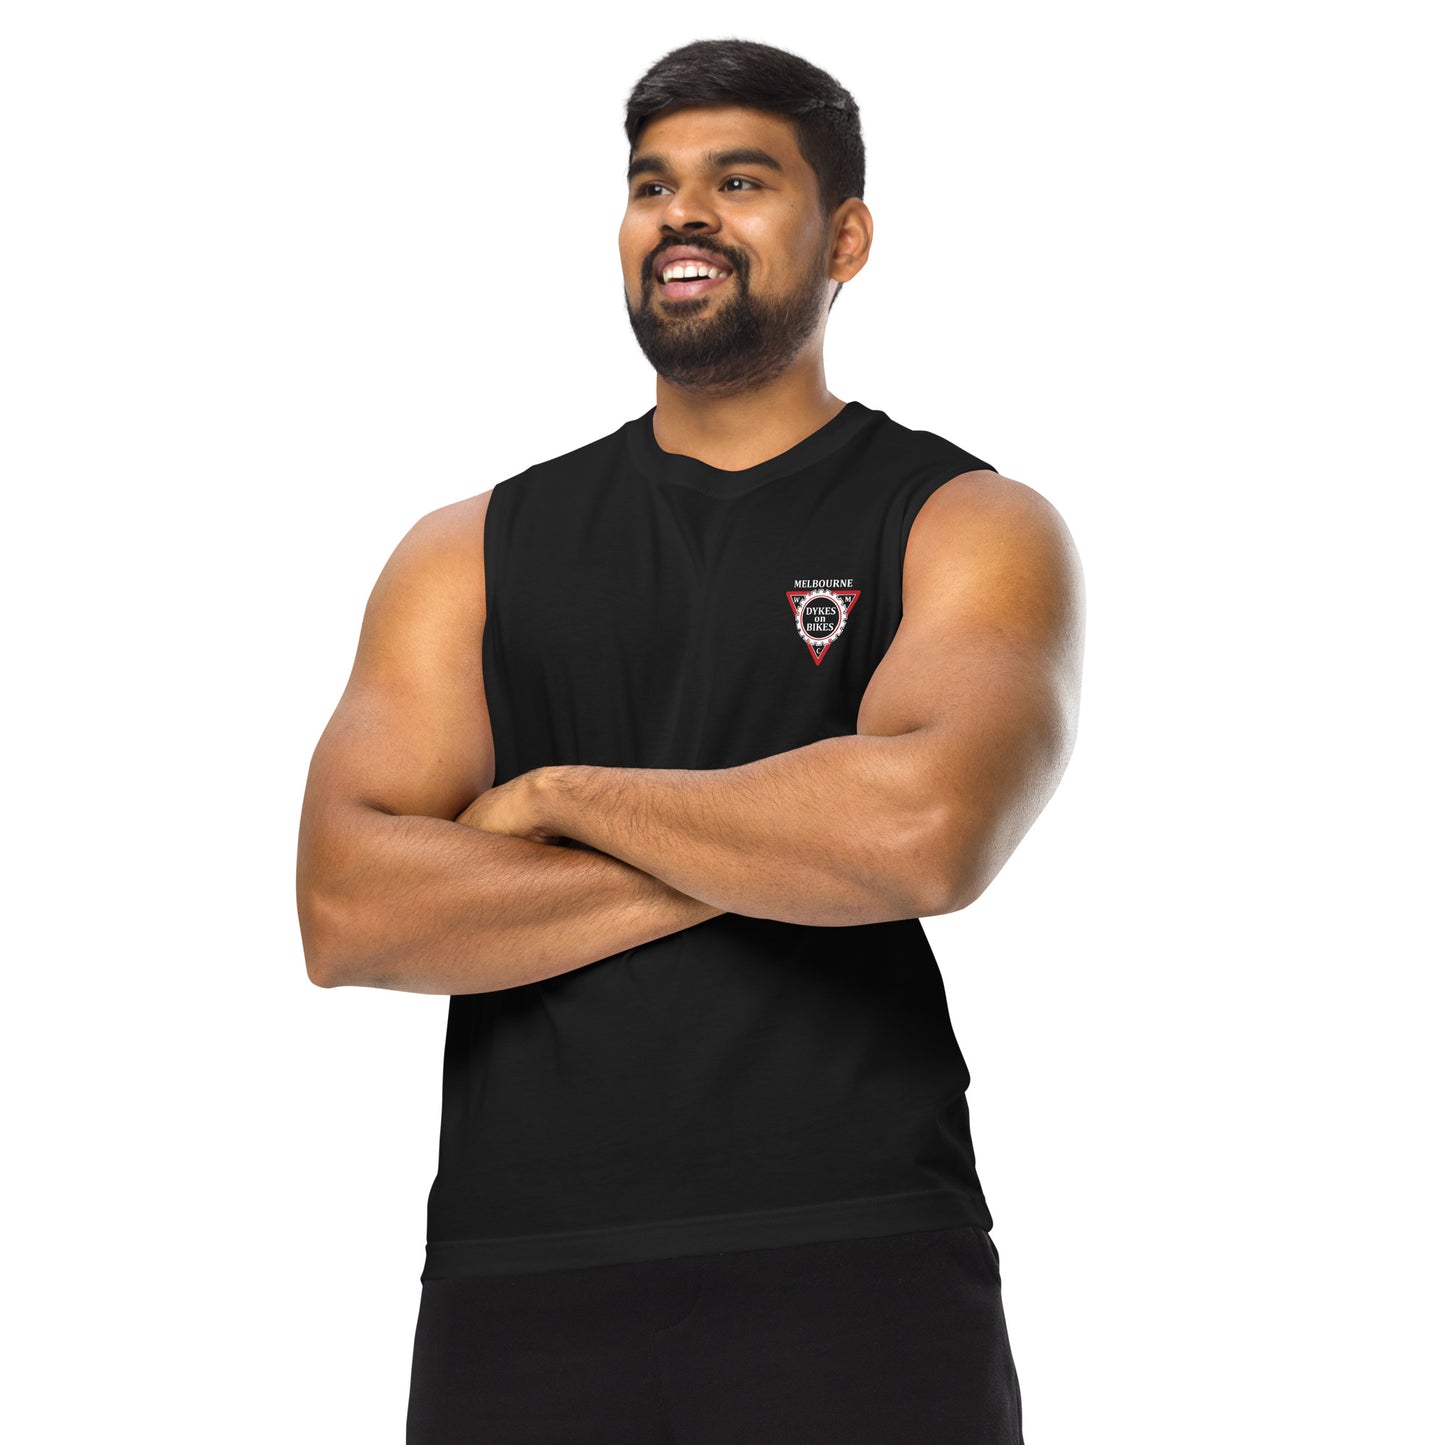 Unisex Muscle Shirt - Black